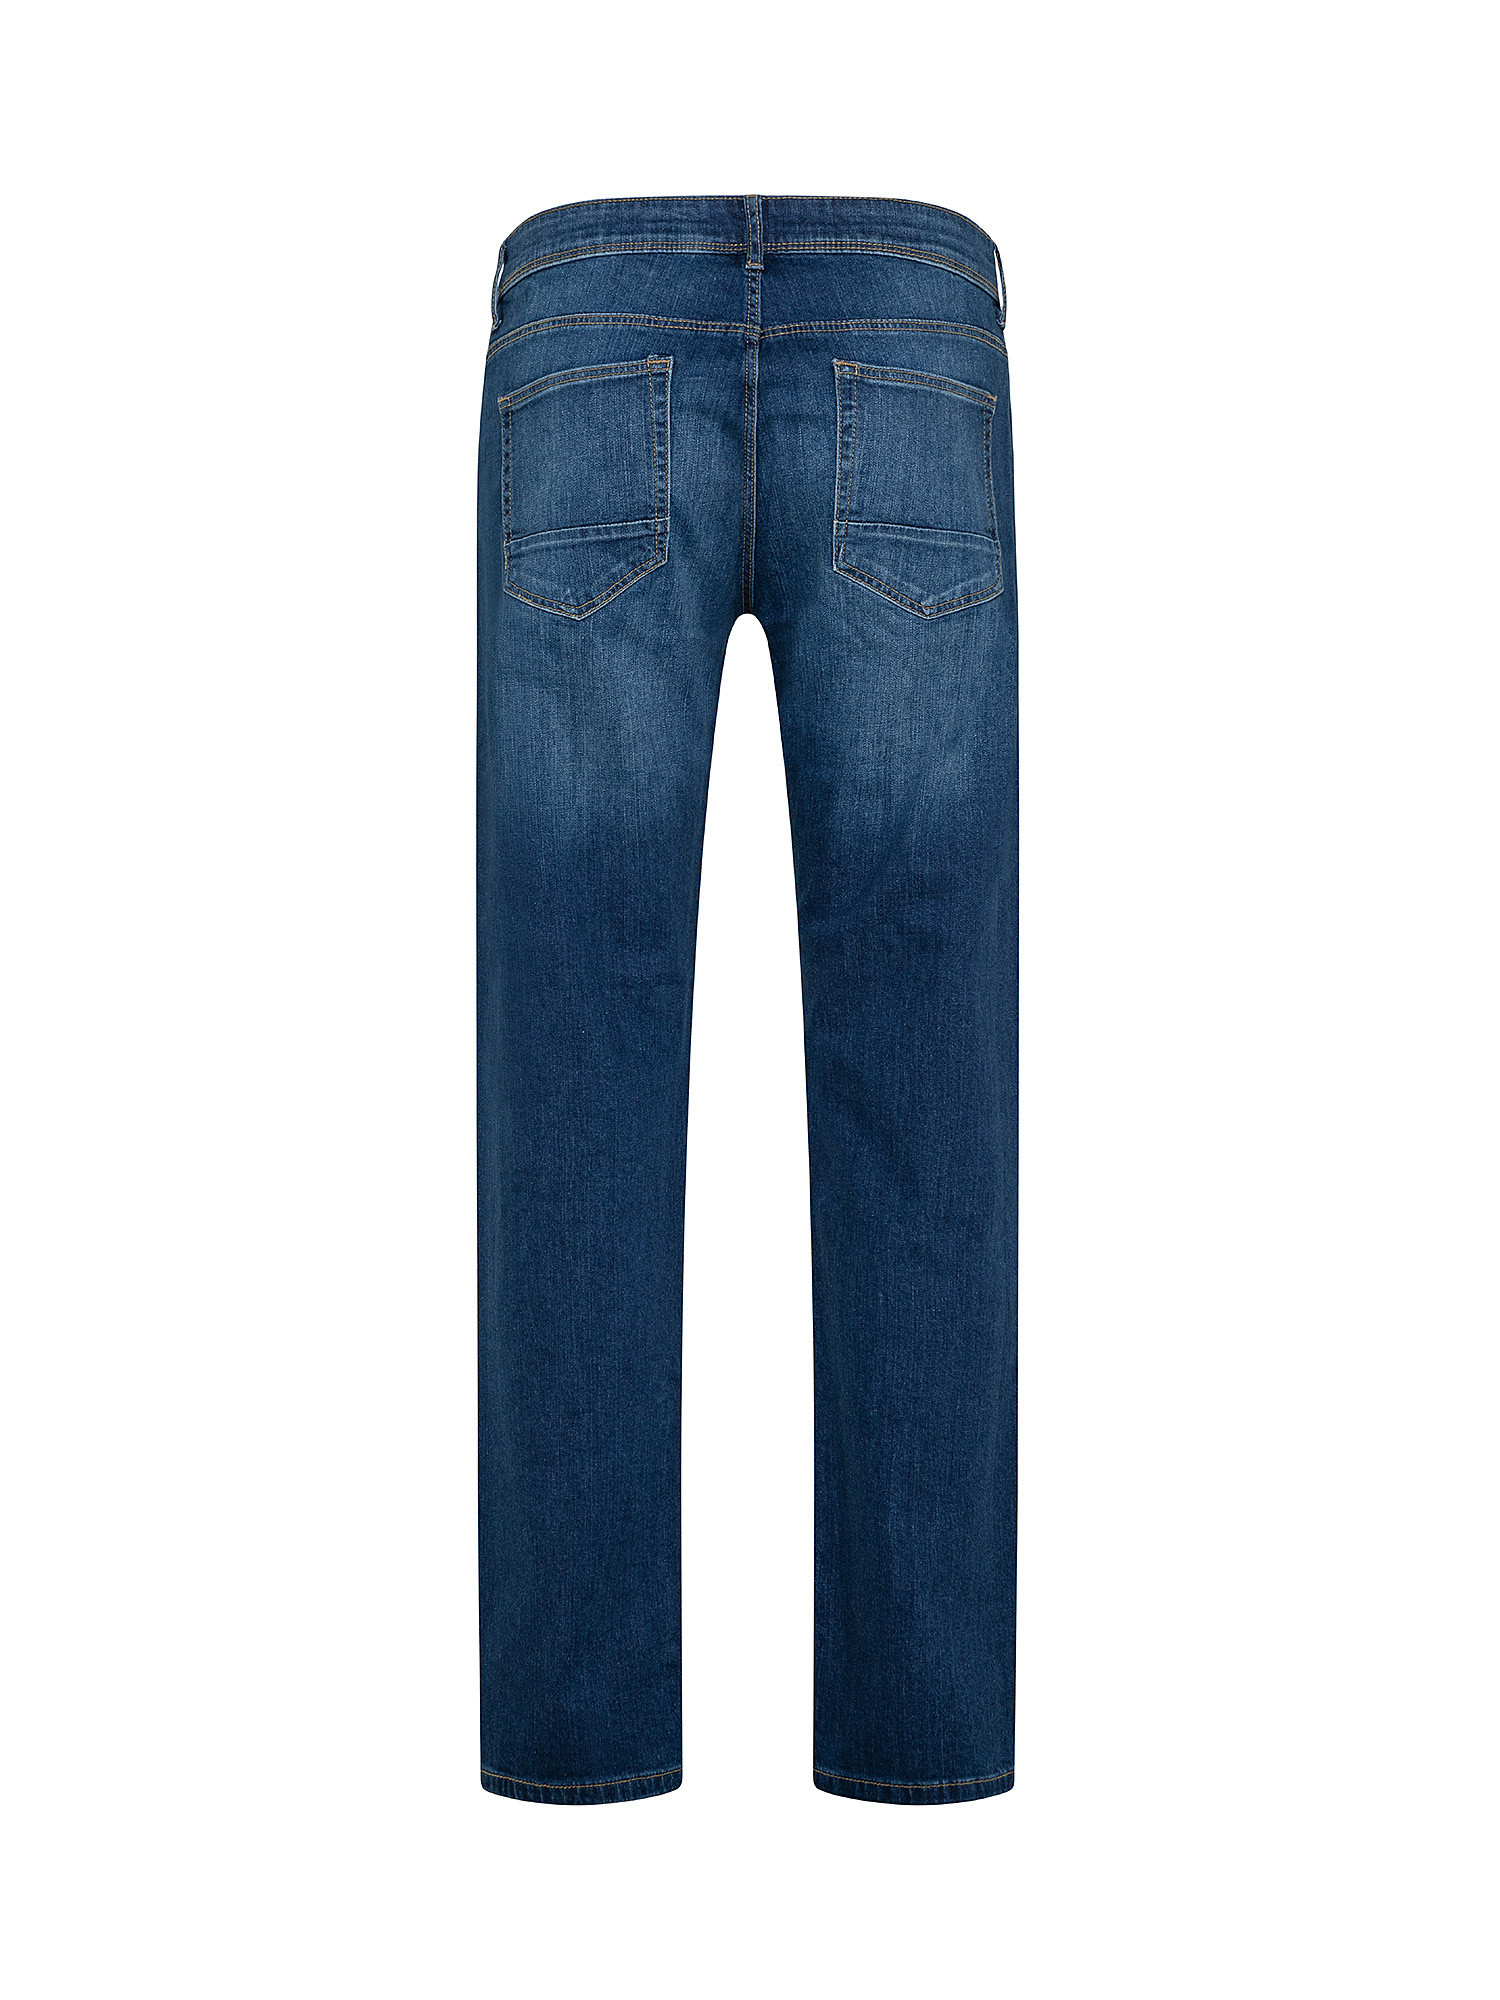 Jeans 5 tasche slim cotone leggero stretch, Blu scuro, large image number 1